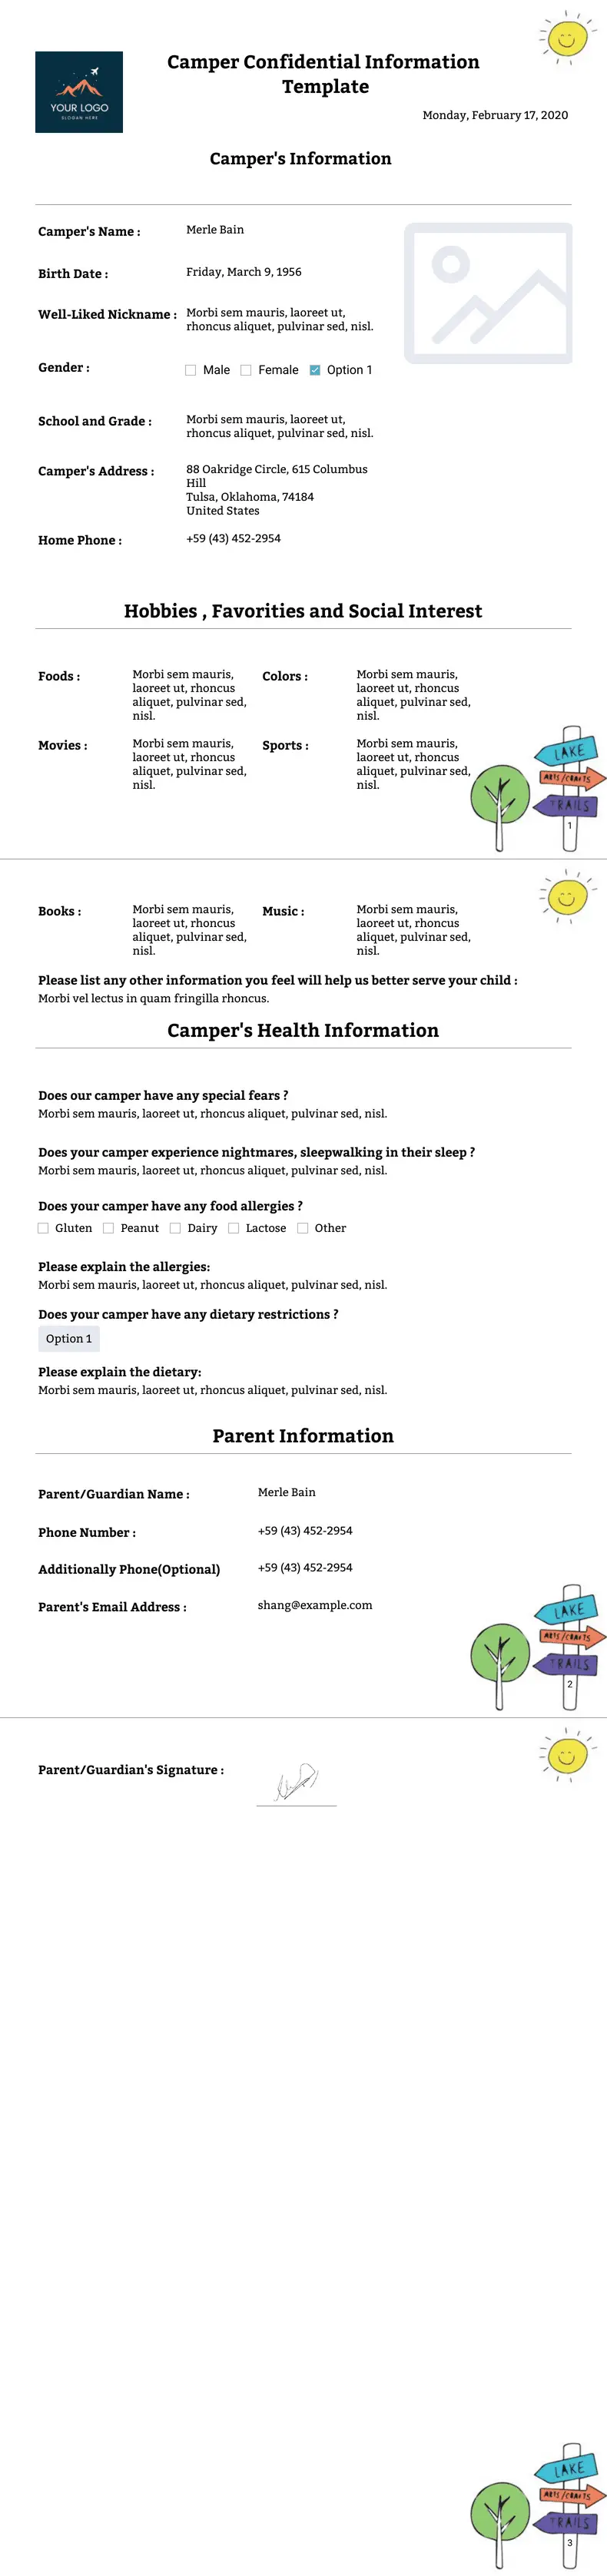 Camper Confidential Information